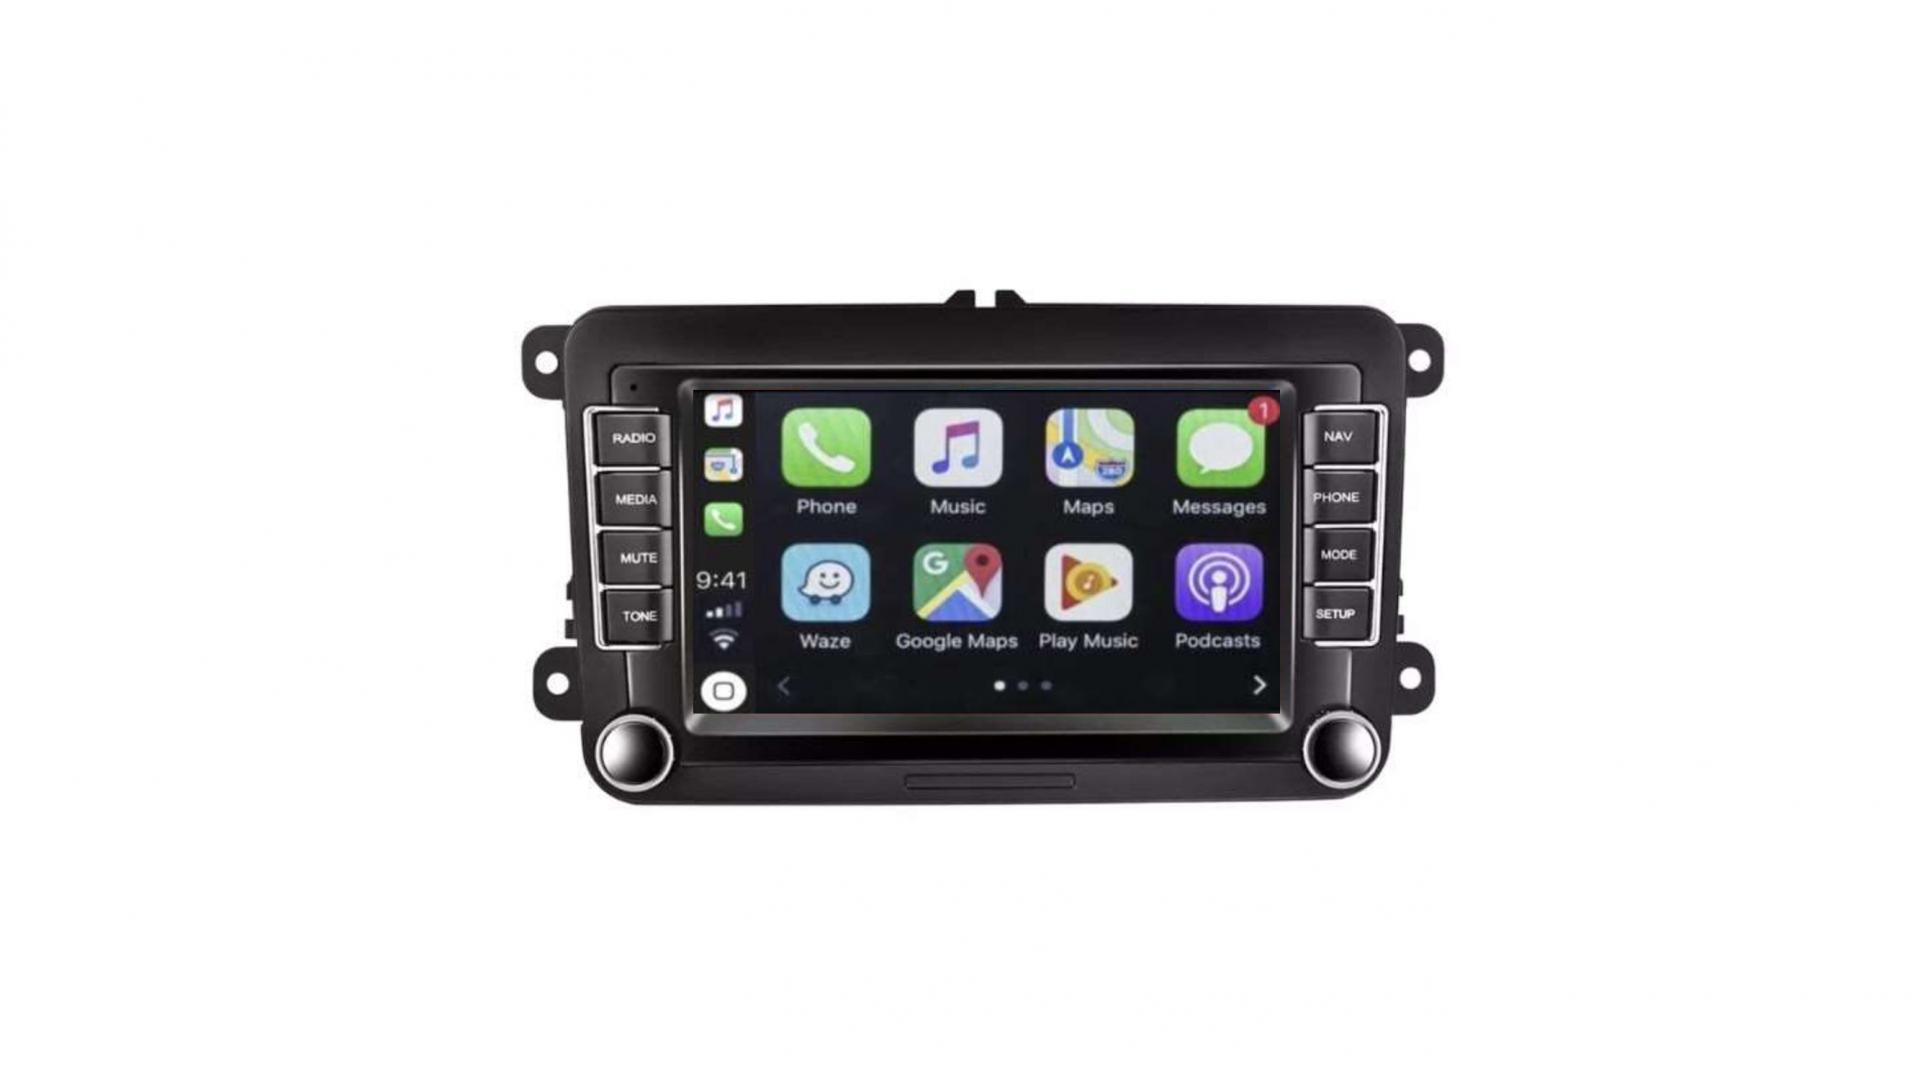 Hikity Apple Carplay sans Fil Autoradio avec GPS pour VW Golf 5 6 Passat  Touran Polo 7'' Écran Tactile Android Autoradio Bluetooth avec Android Auto/WiFi/FM/RDS/SWC/Canbus/Caméra  de Recul : : High-Tech